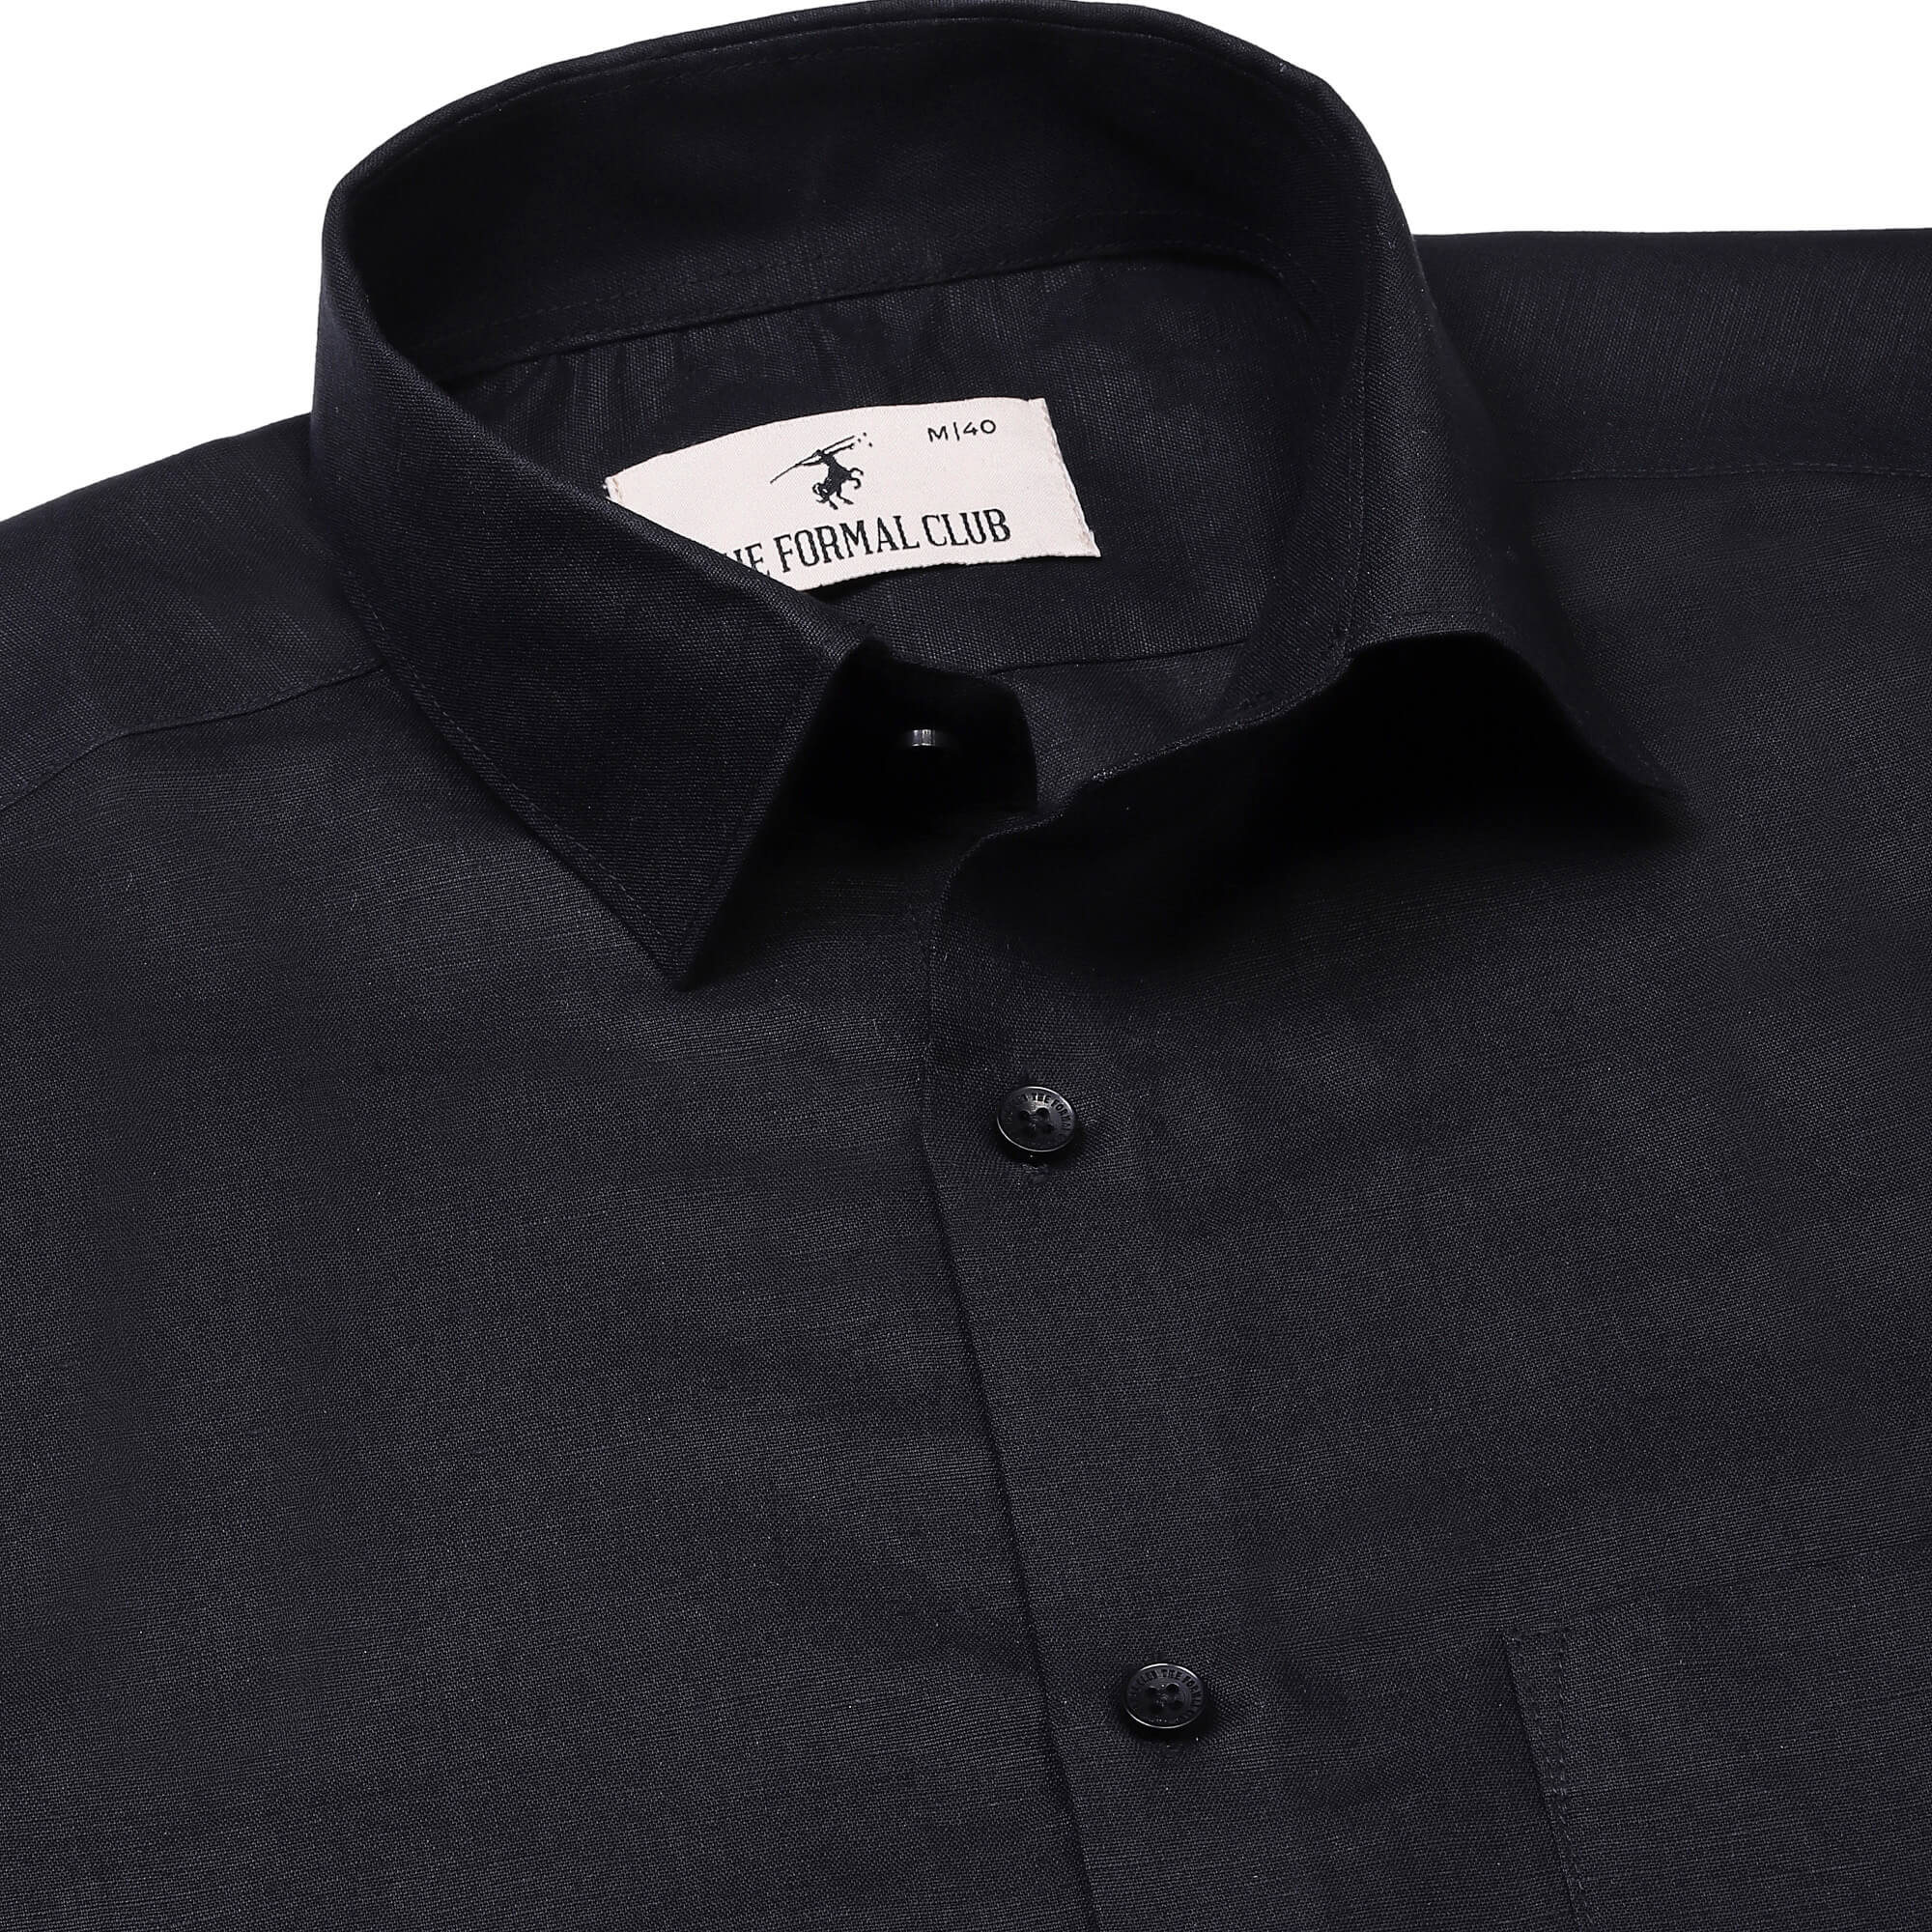 Luna Lenin Solid Shirt In Black Slim Fit - The Formal Club